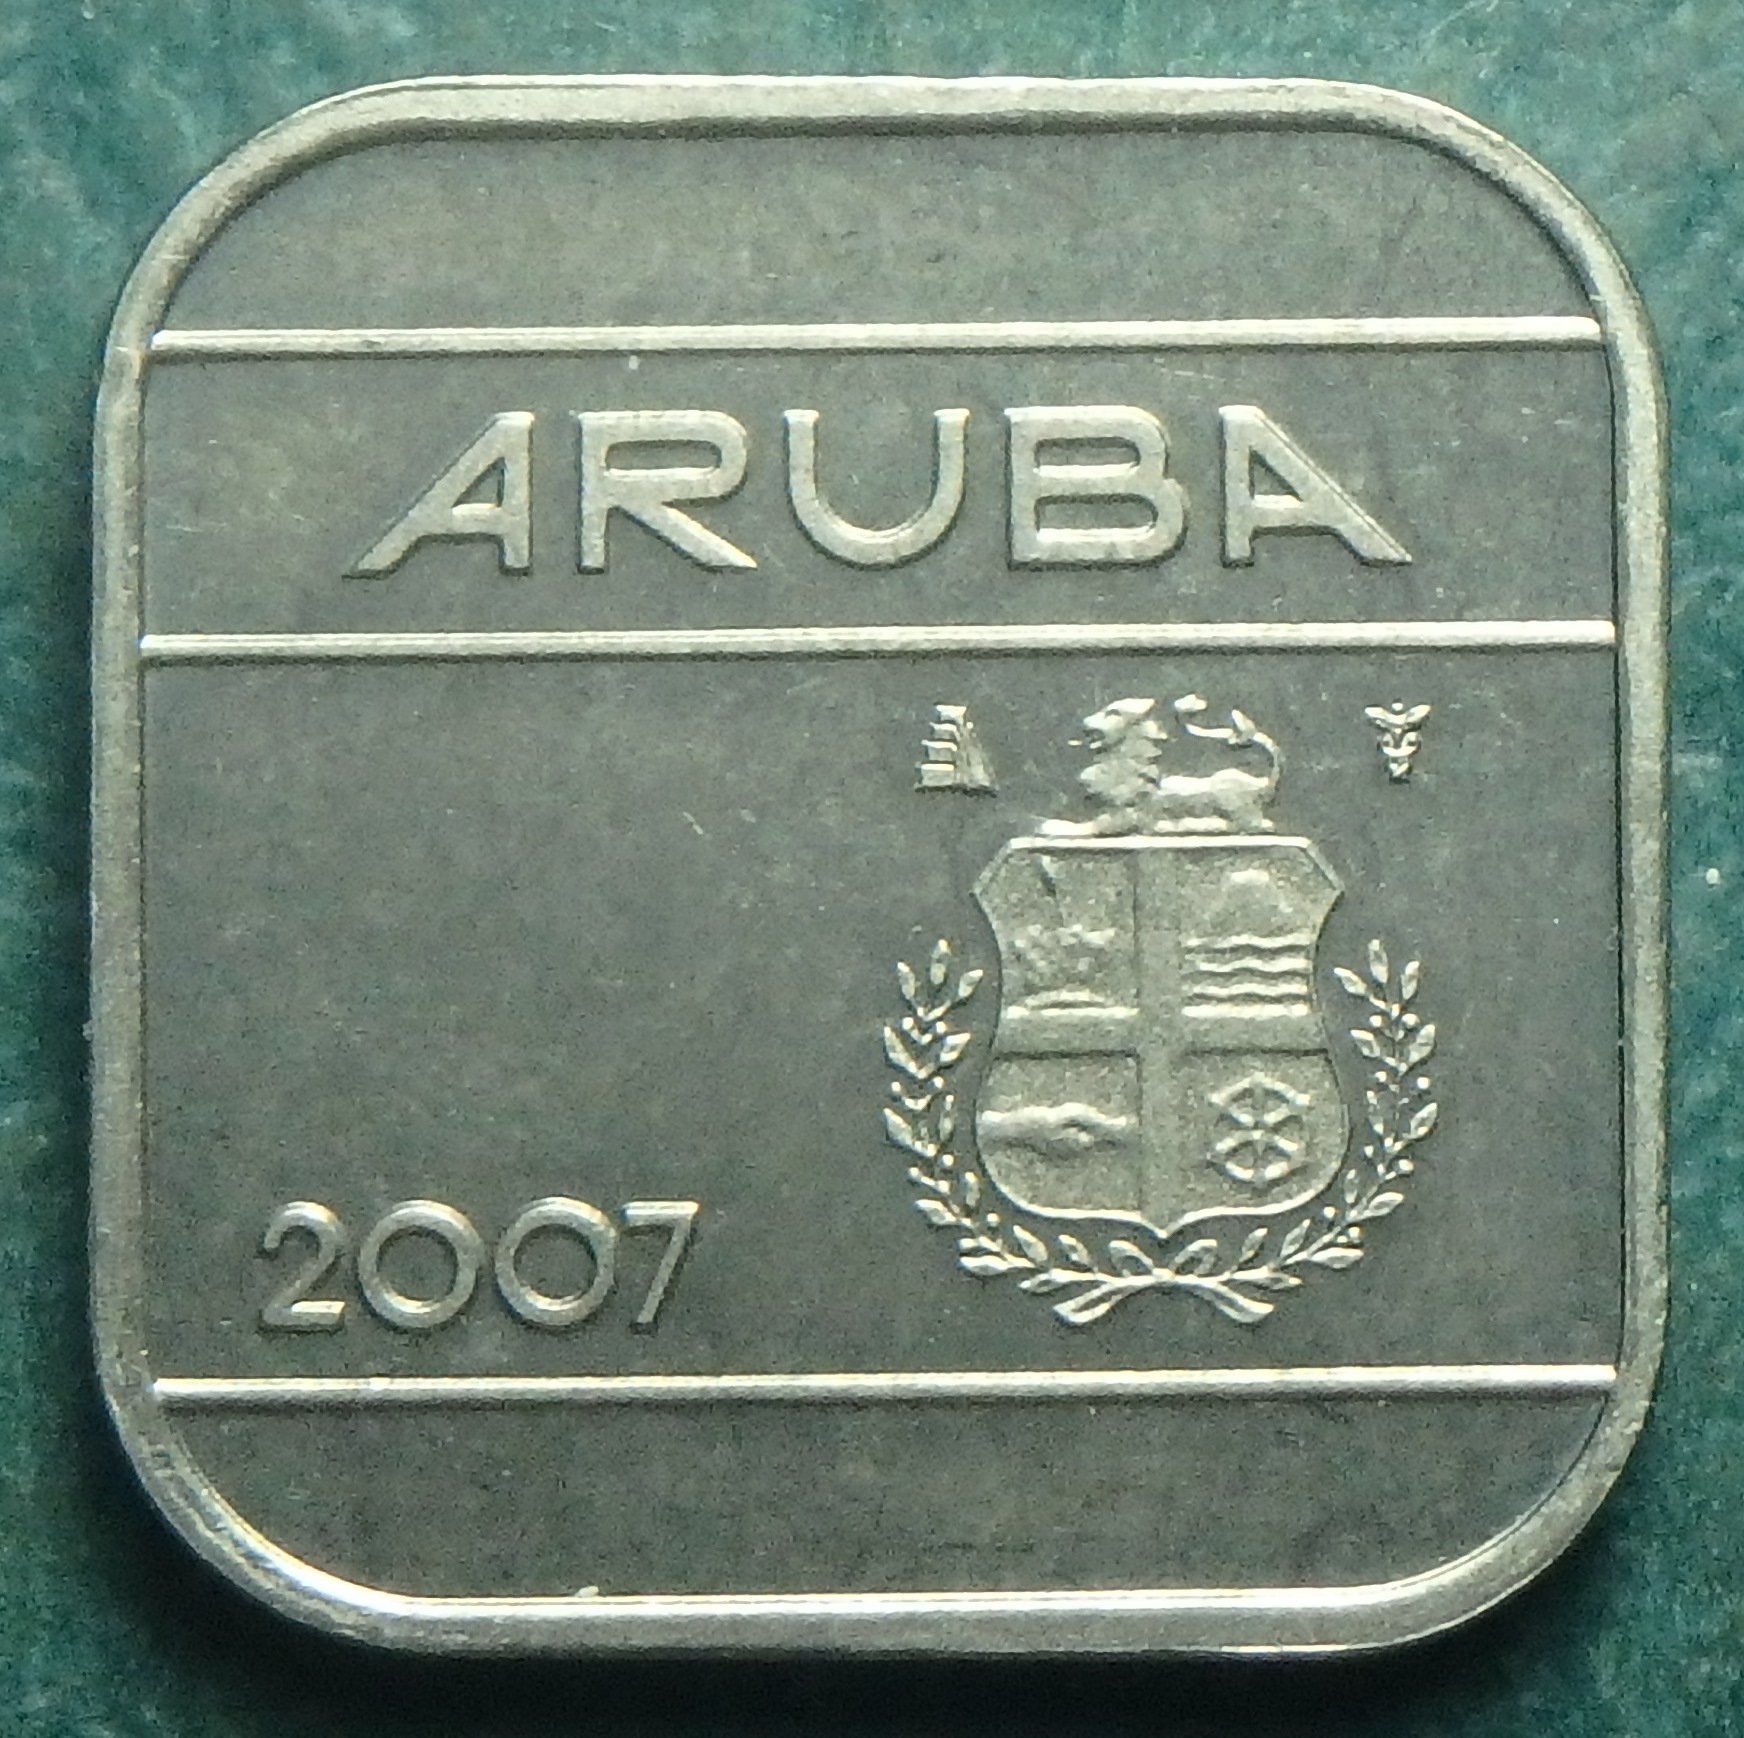 2007 Aruba 50 c obv.JPG